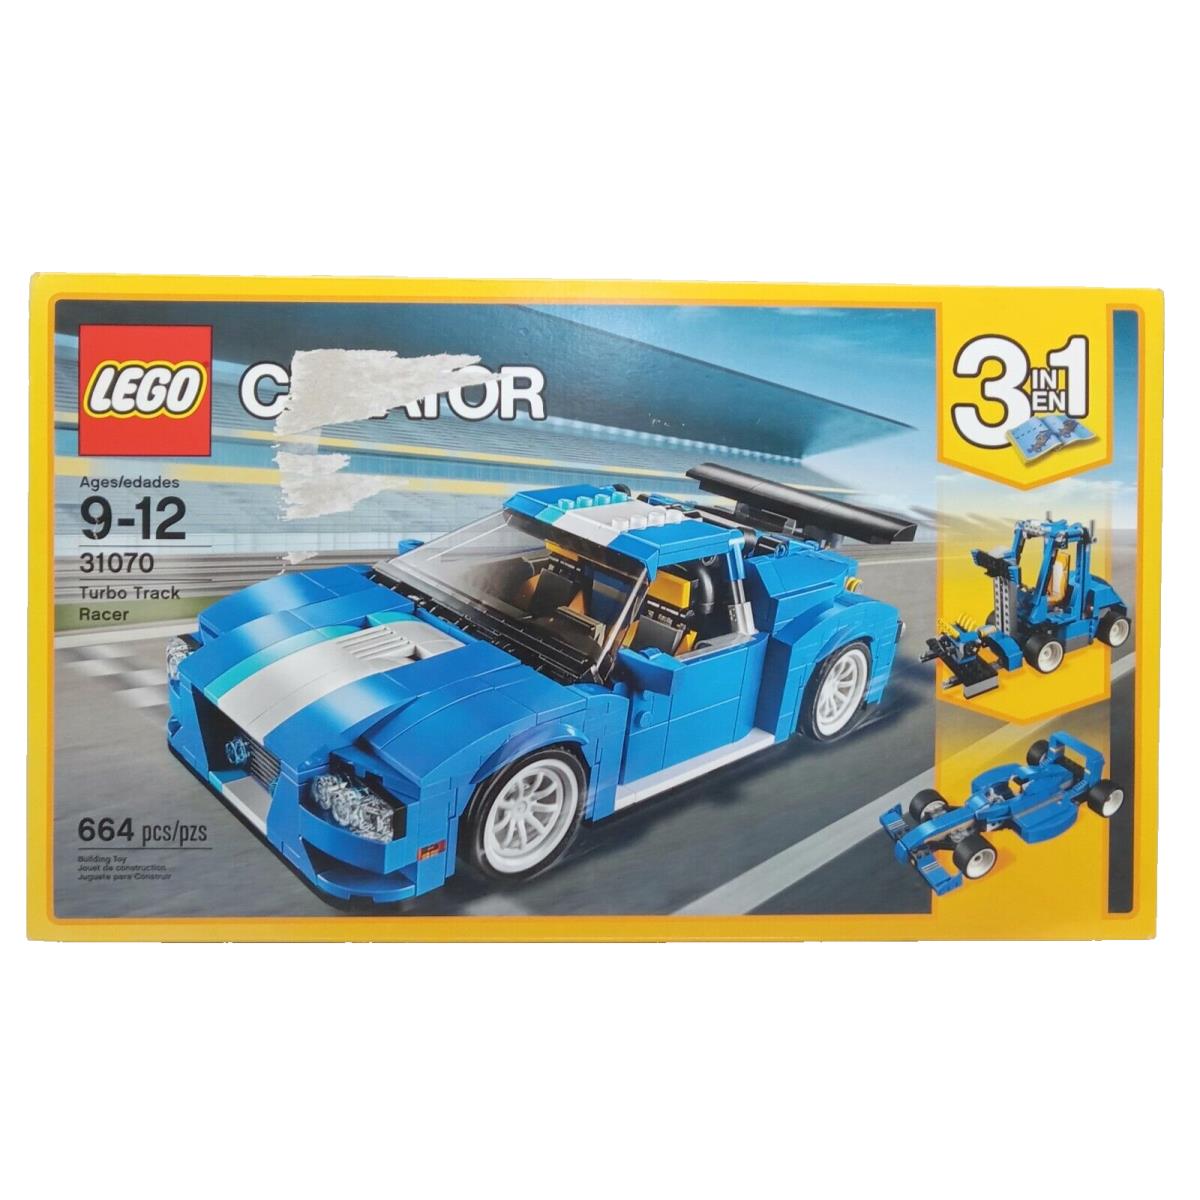 Lego Creator 3 in 1 Turbo Track Racer 31070 6175278